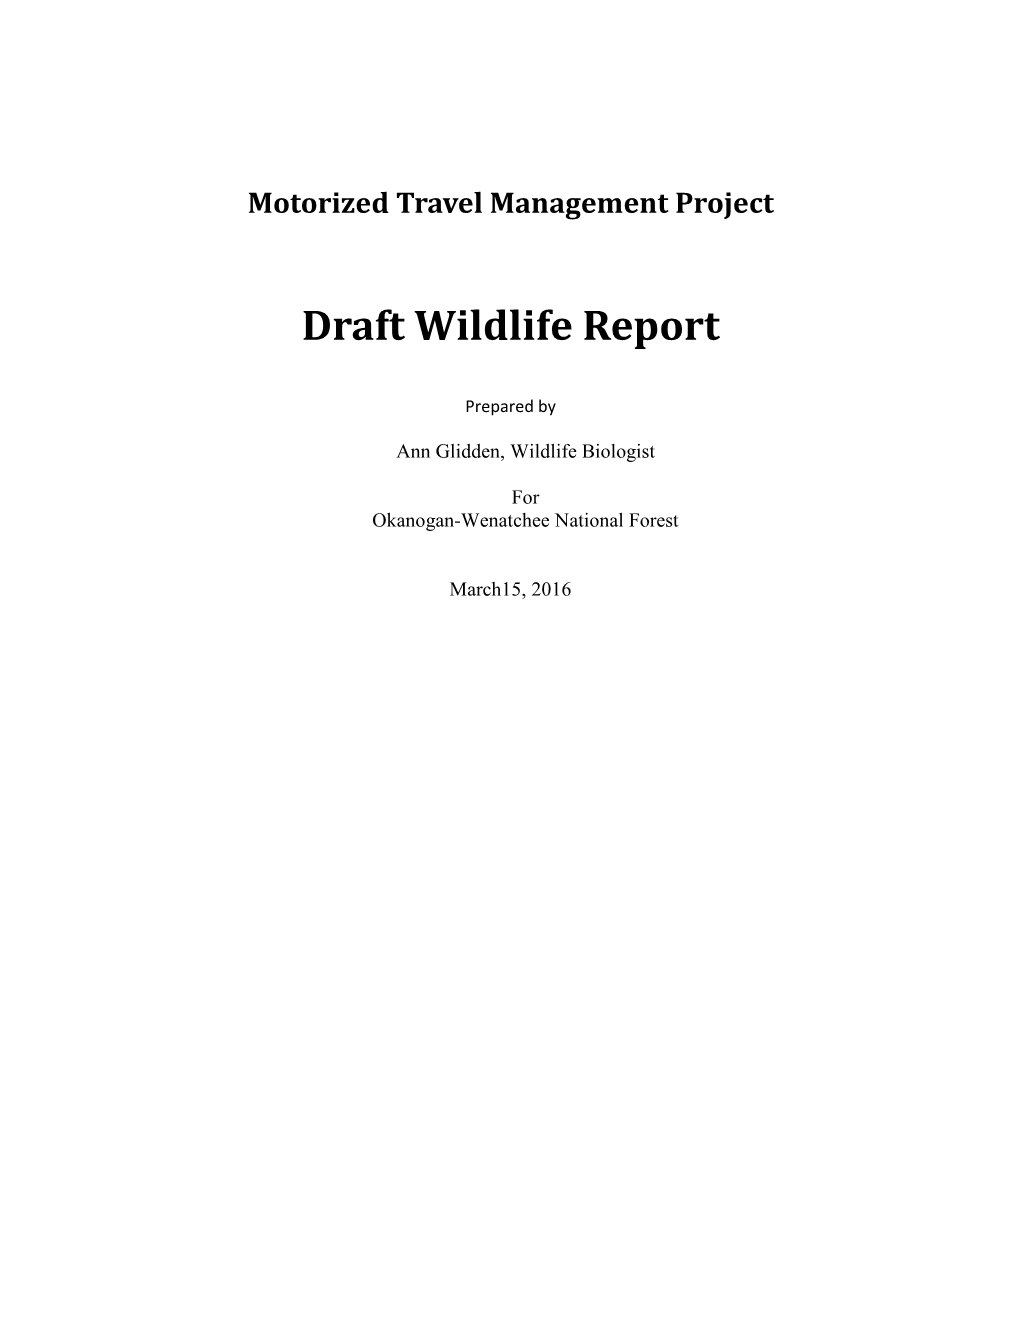 Draft Wildlife Report